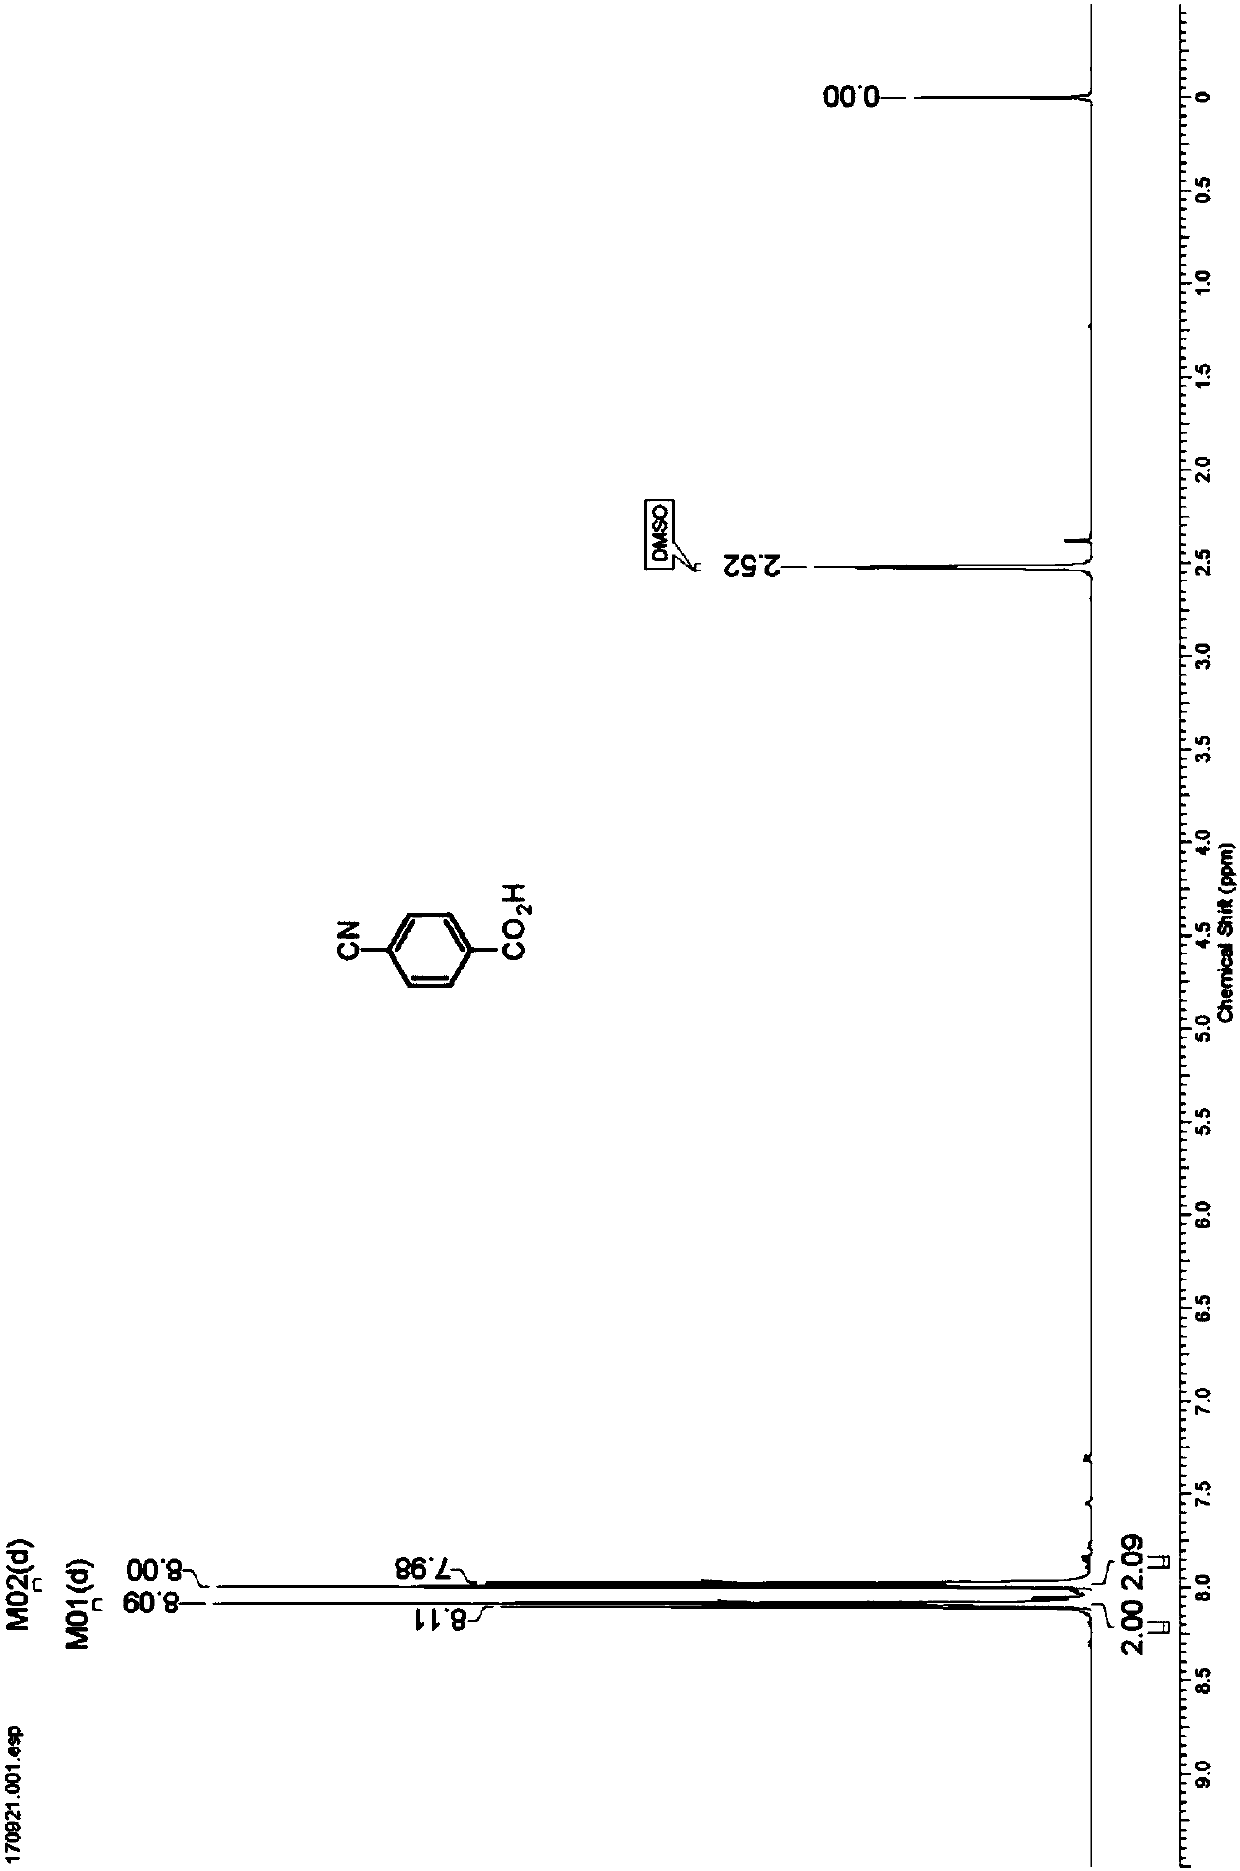 Nitrilase capable of preparing paracyanobenzoic acid by hydrolyzing p-benzenedicarbonitrile